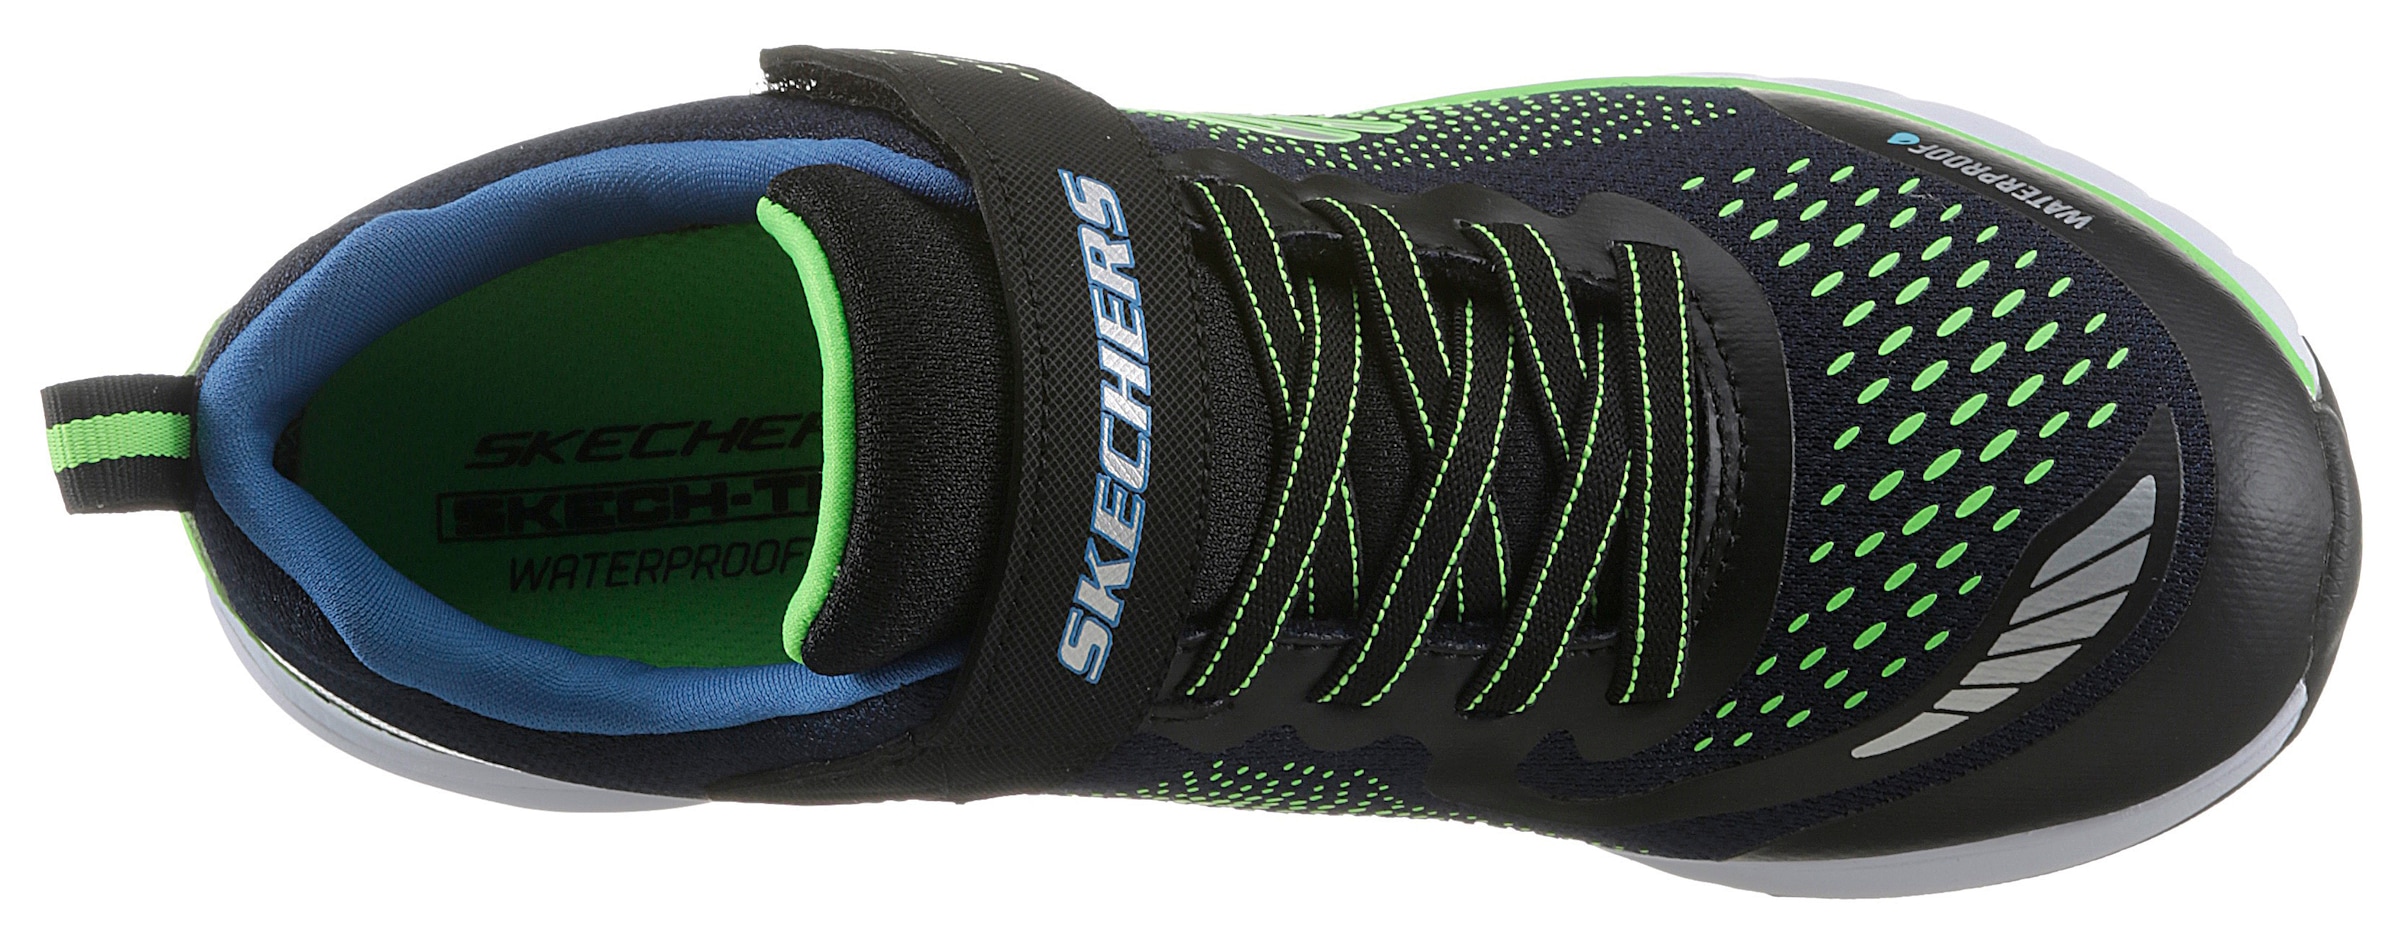 Skechers Kids Sneaker »ULTRA GROOVE«, mit Waterproof-Ausstattung bei OTTO online